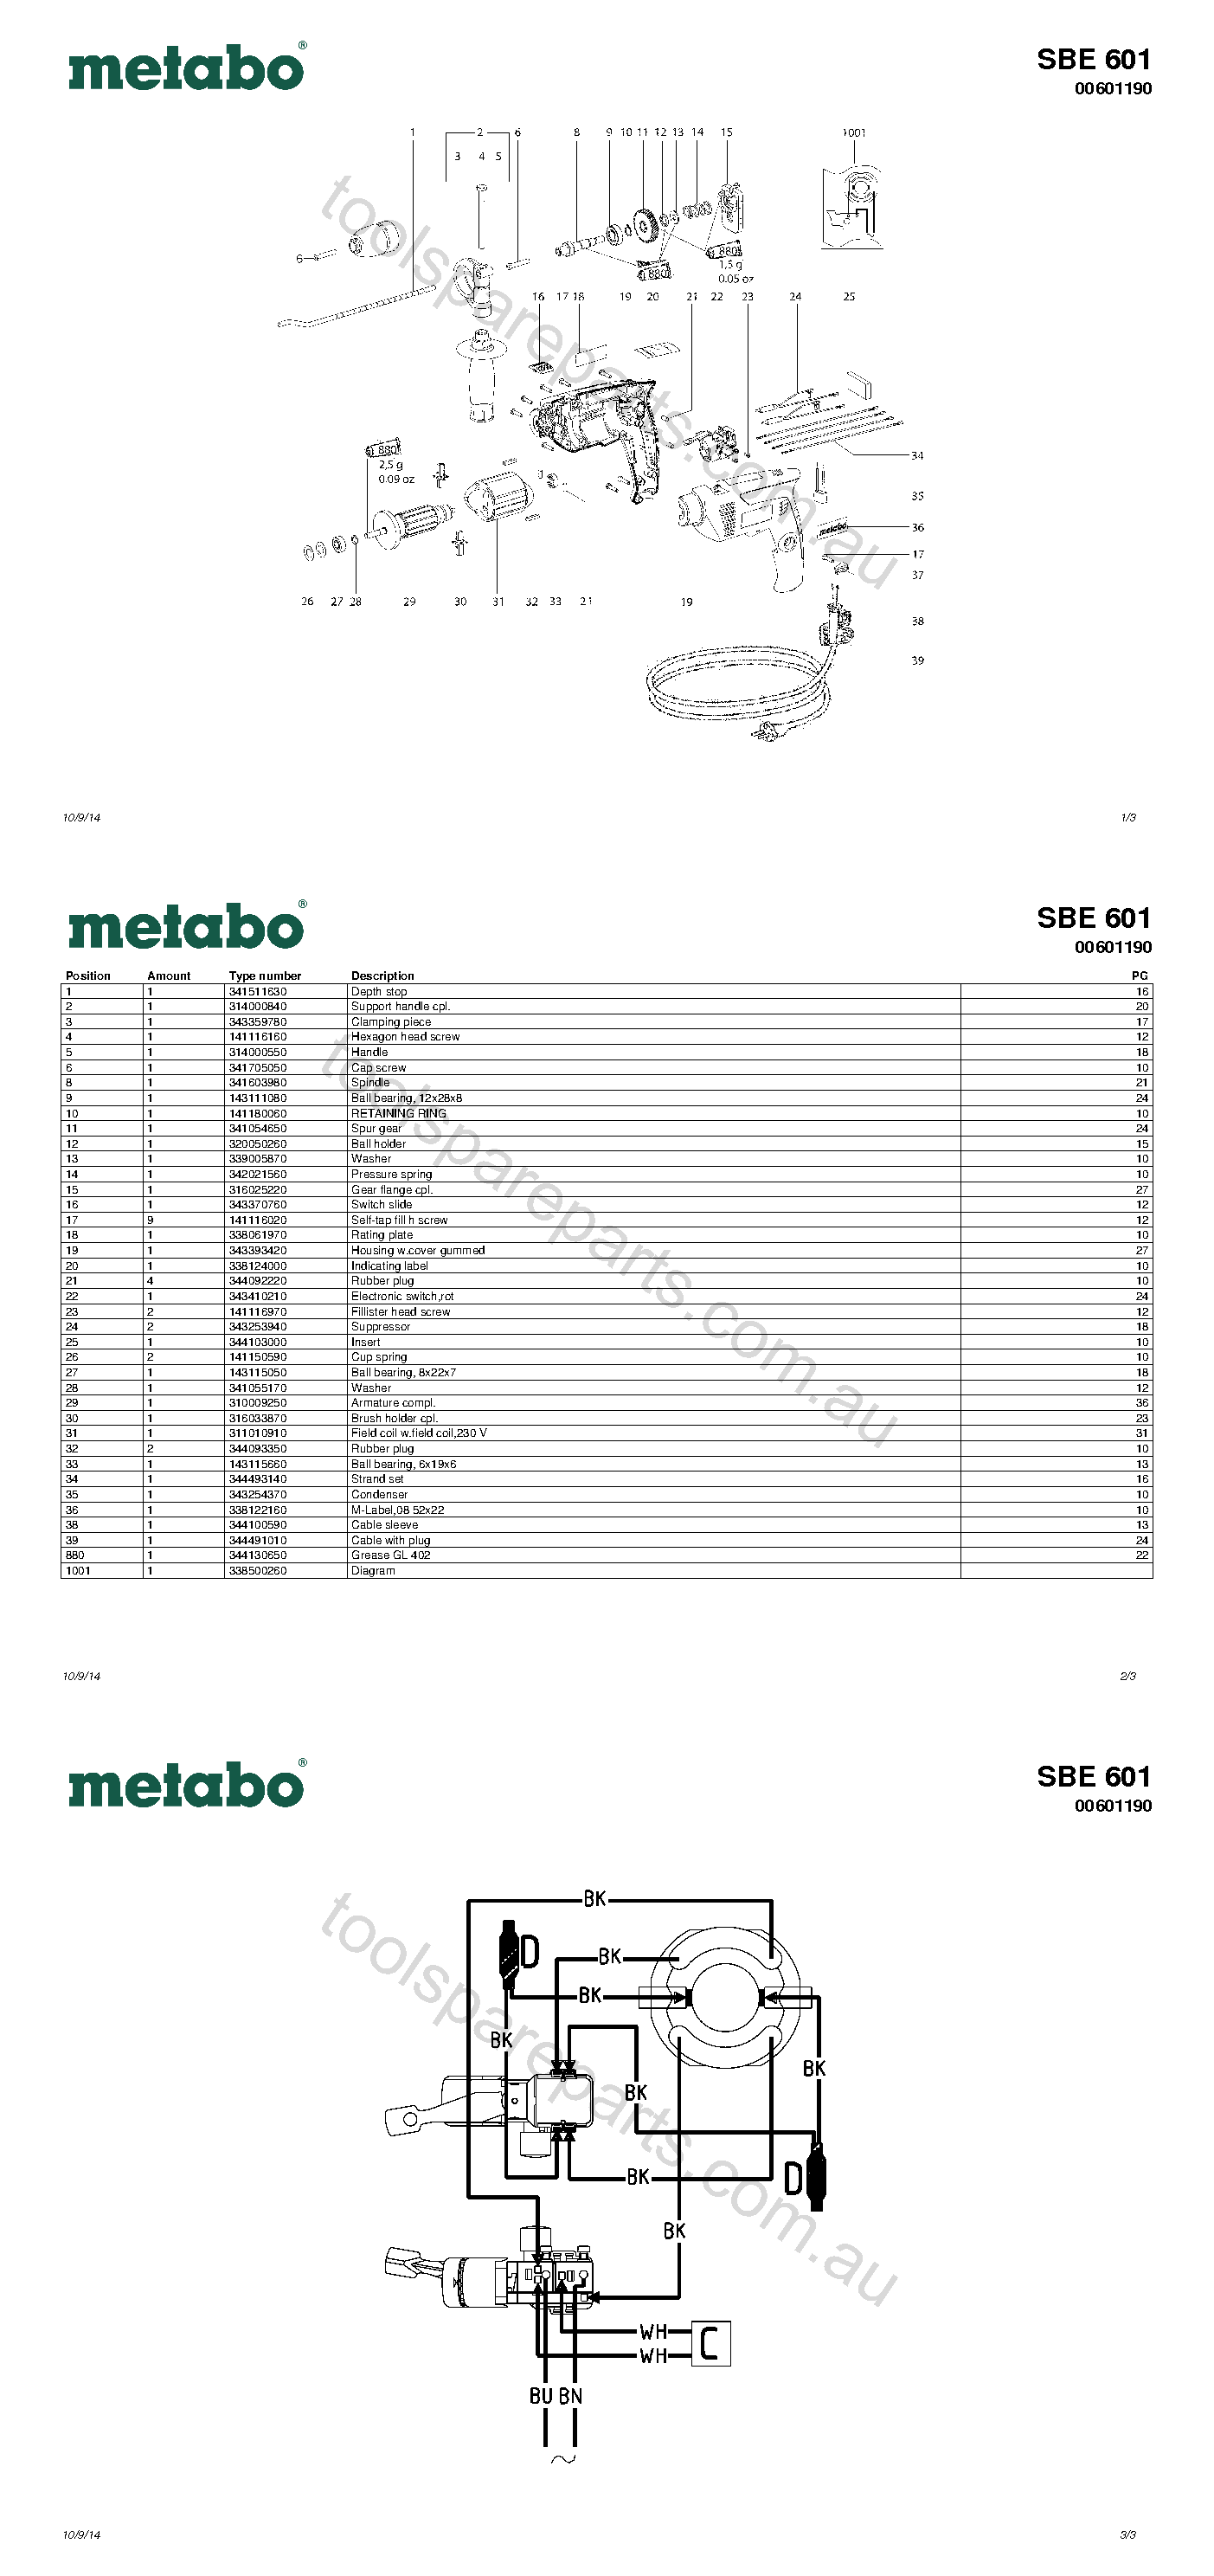 Metabo SBE 601 00601190  Diagram 1